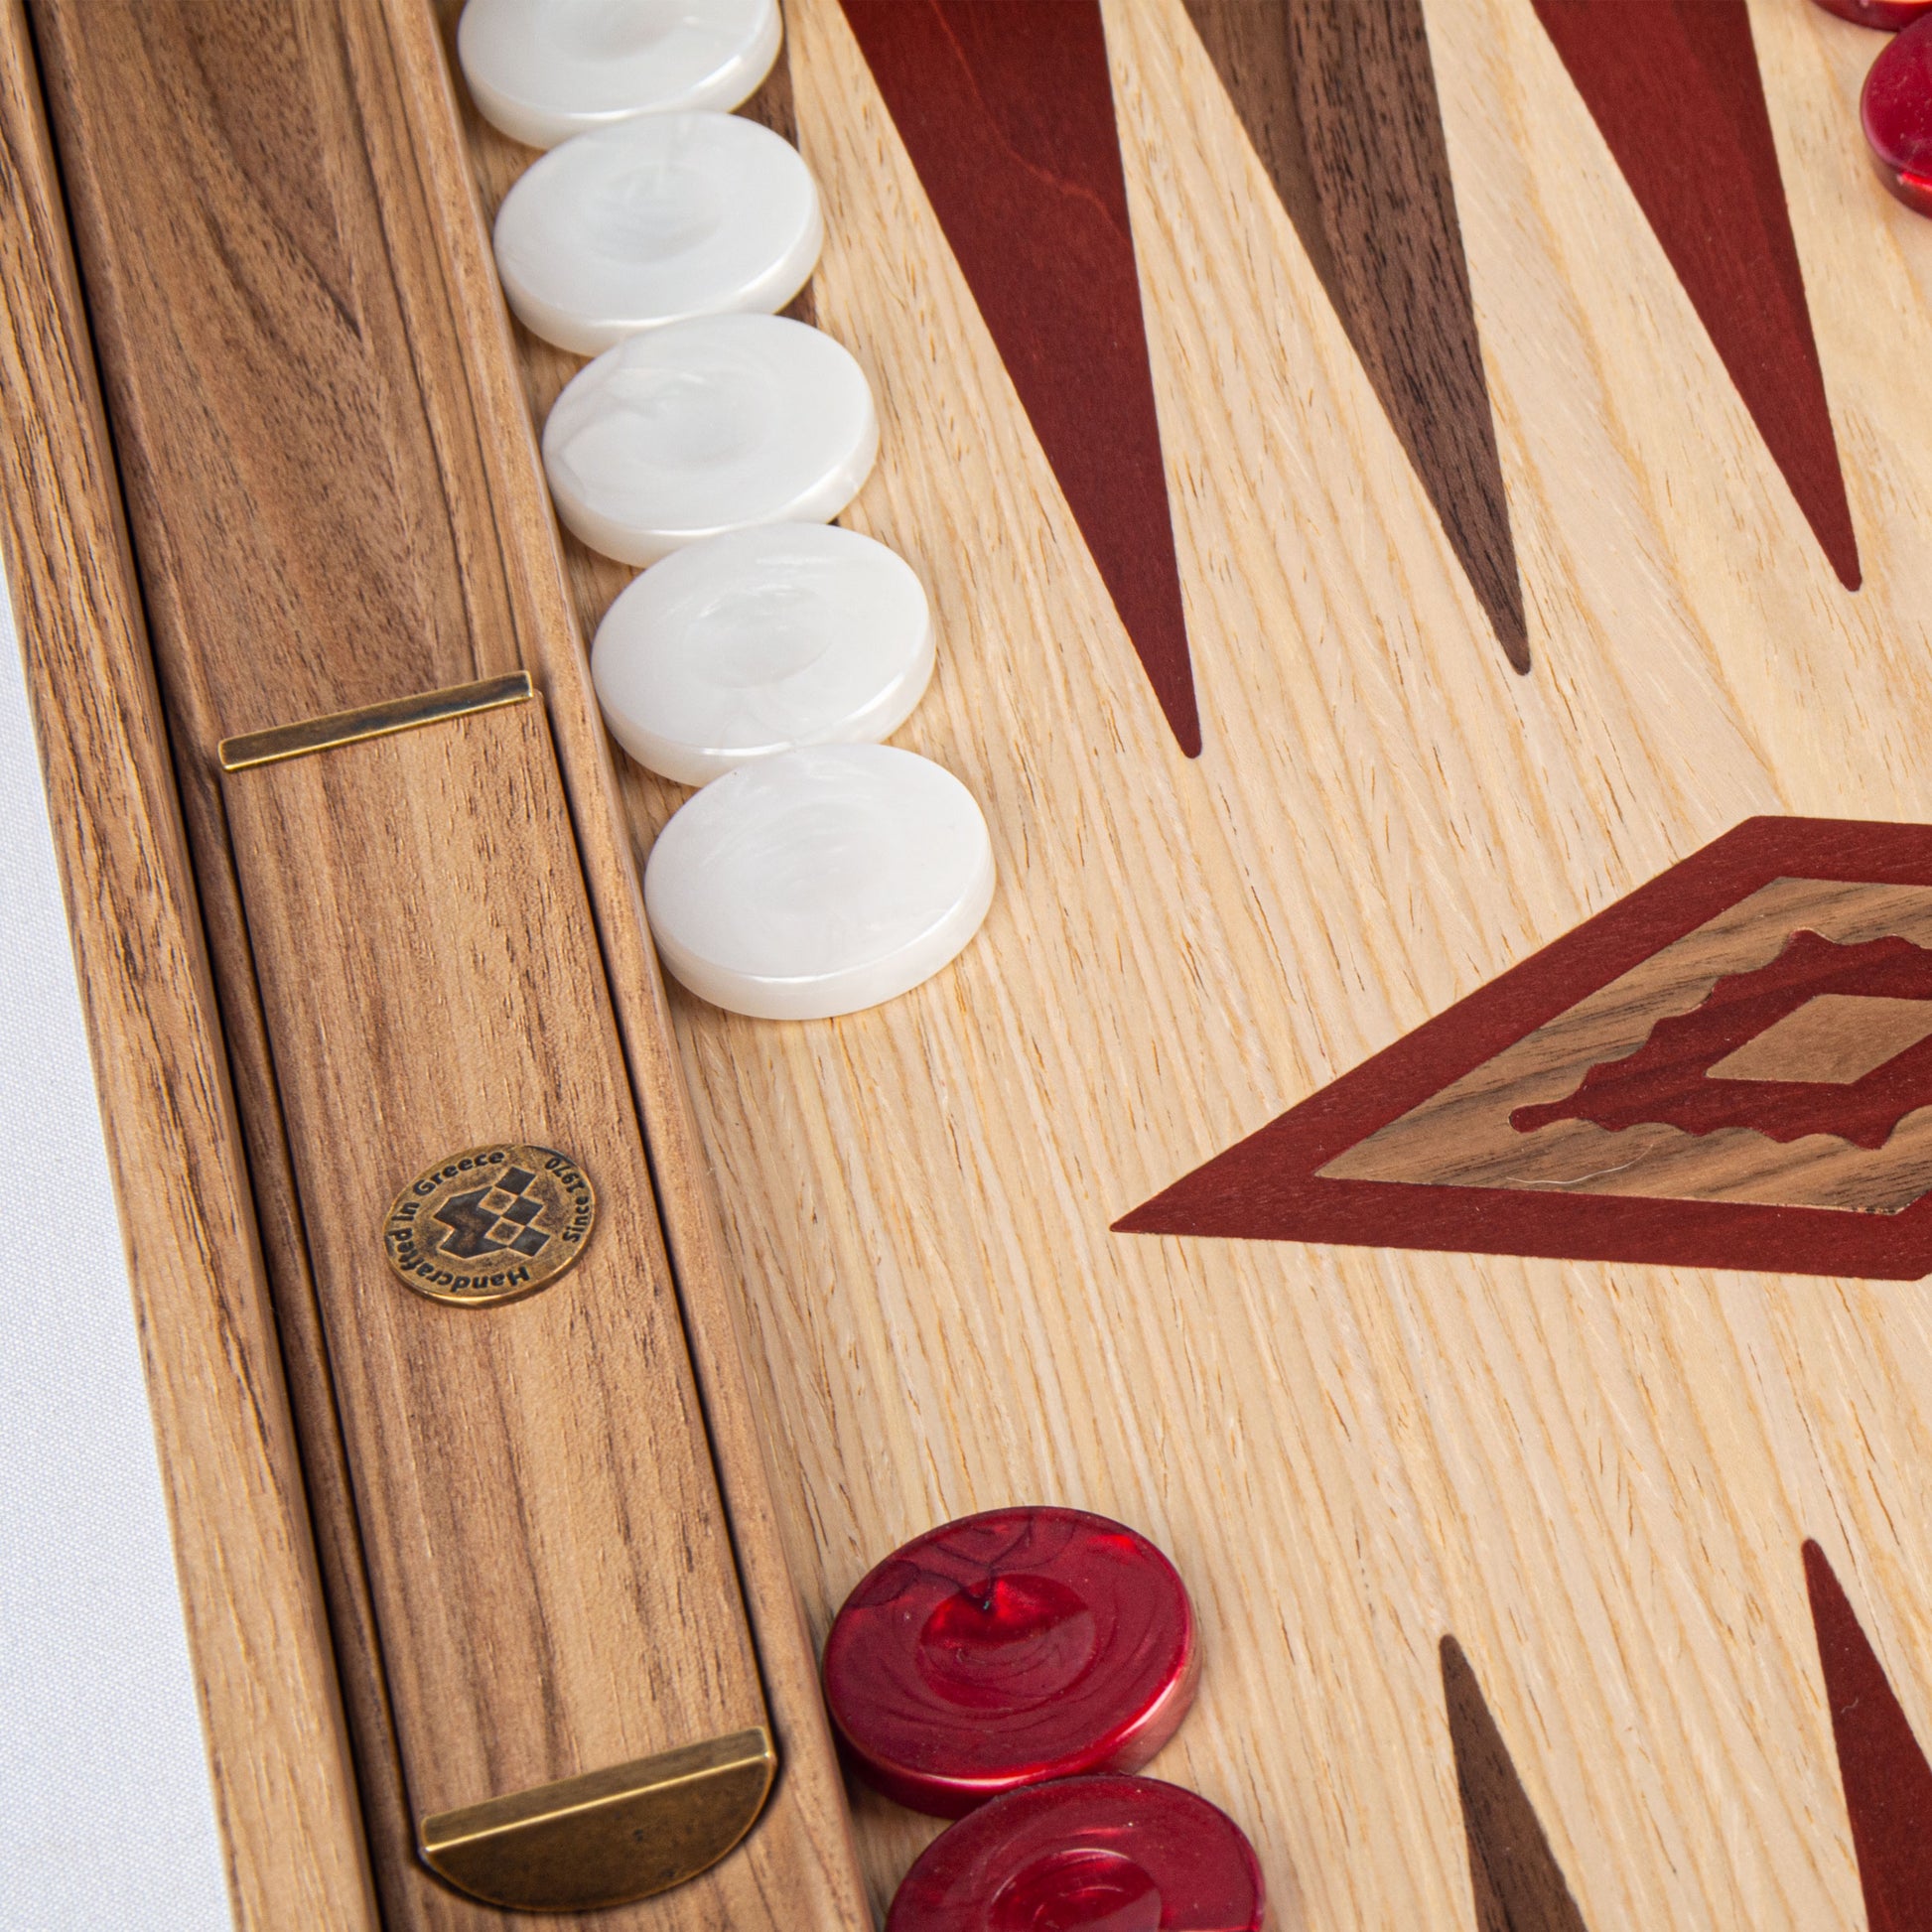 OAK & AMERICAN WALNUT Backgammon with Side Racks - Premium Backgammon from MANOPOULOS Chess & Backgammon - Just €156! Shop now at MANOPOULOS Chess & Backgammon